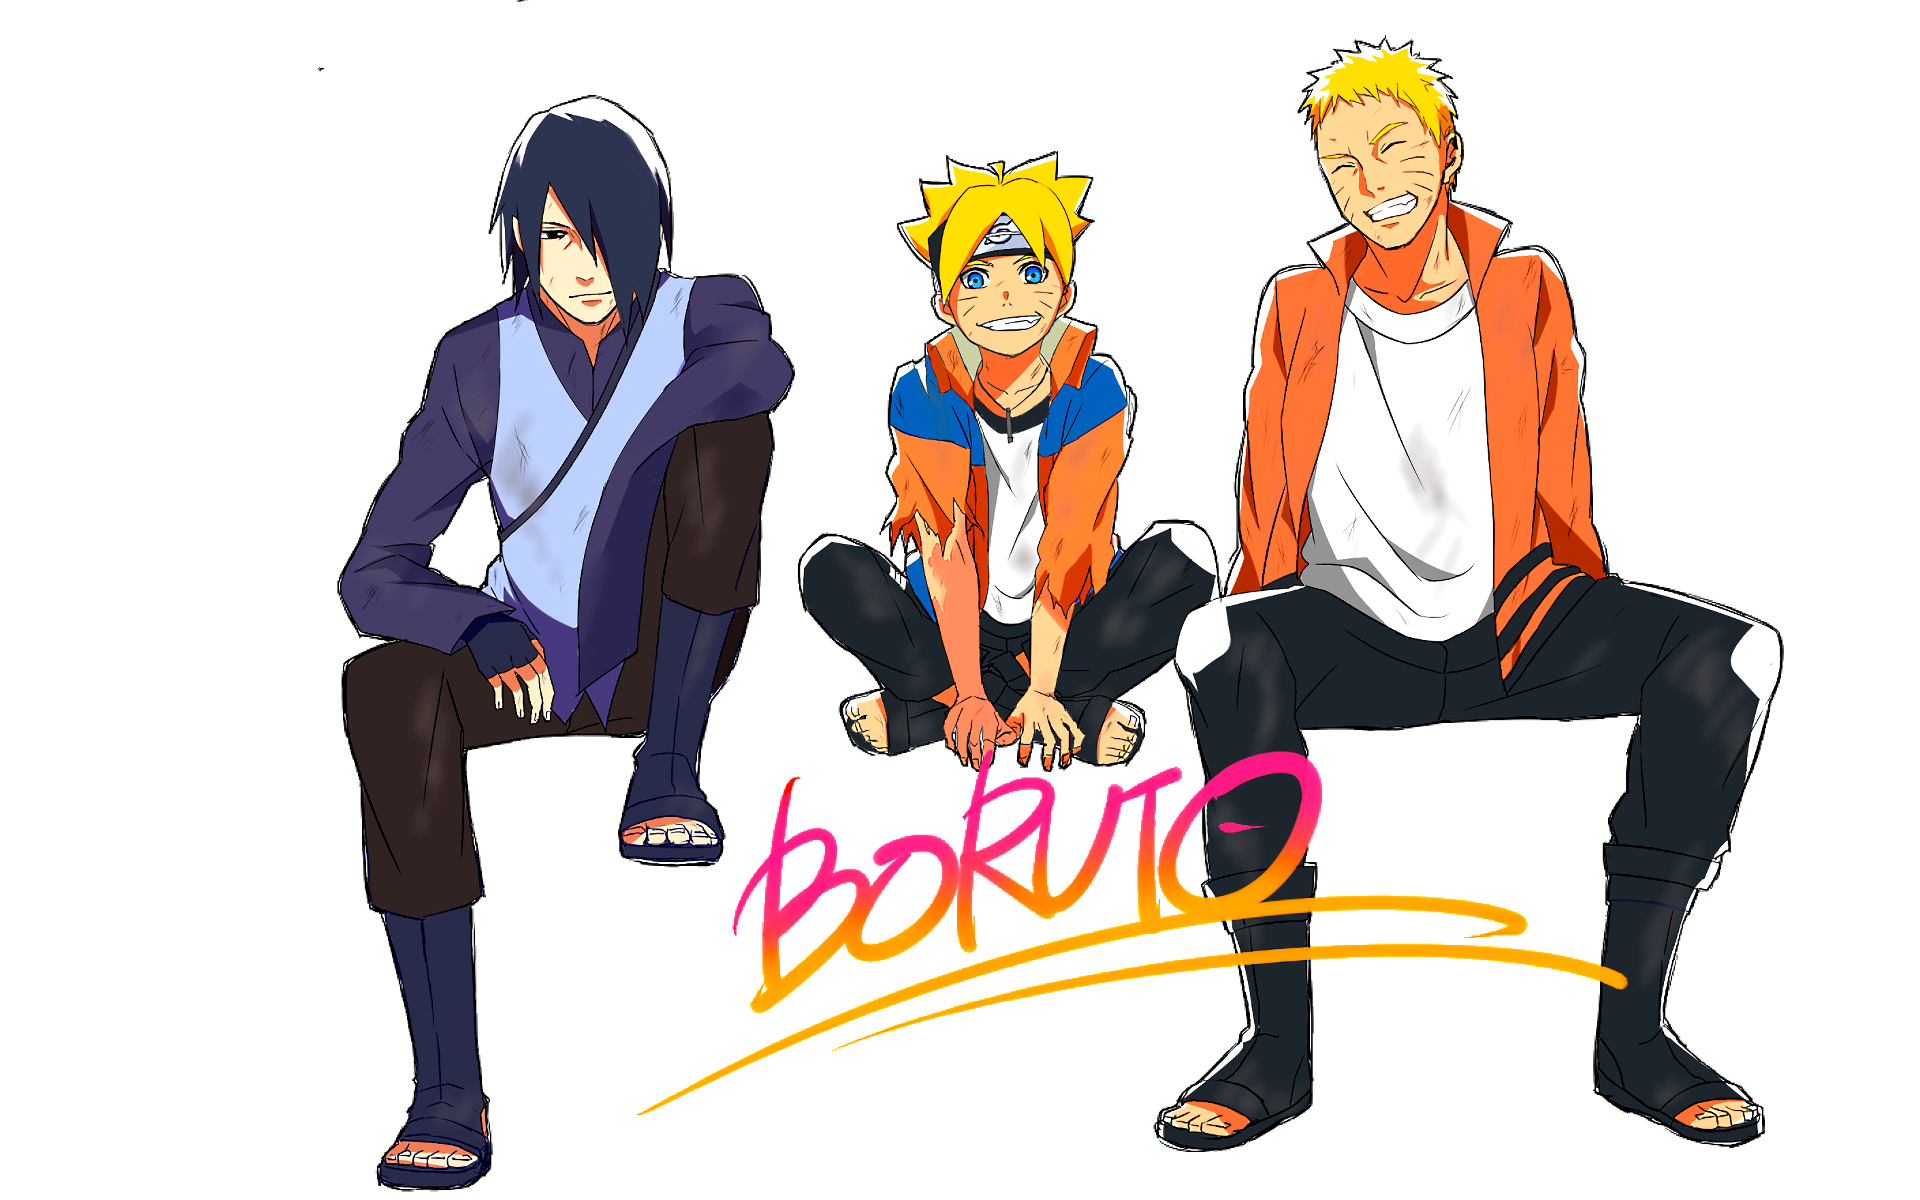 Sasuke and Boruto, Narutopedia